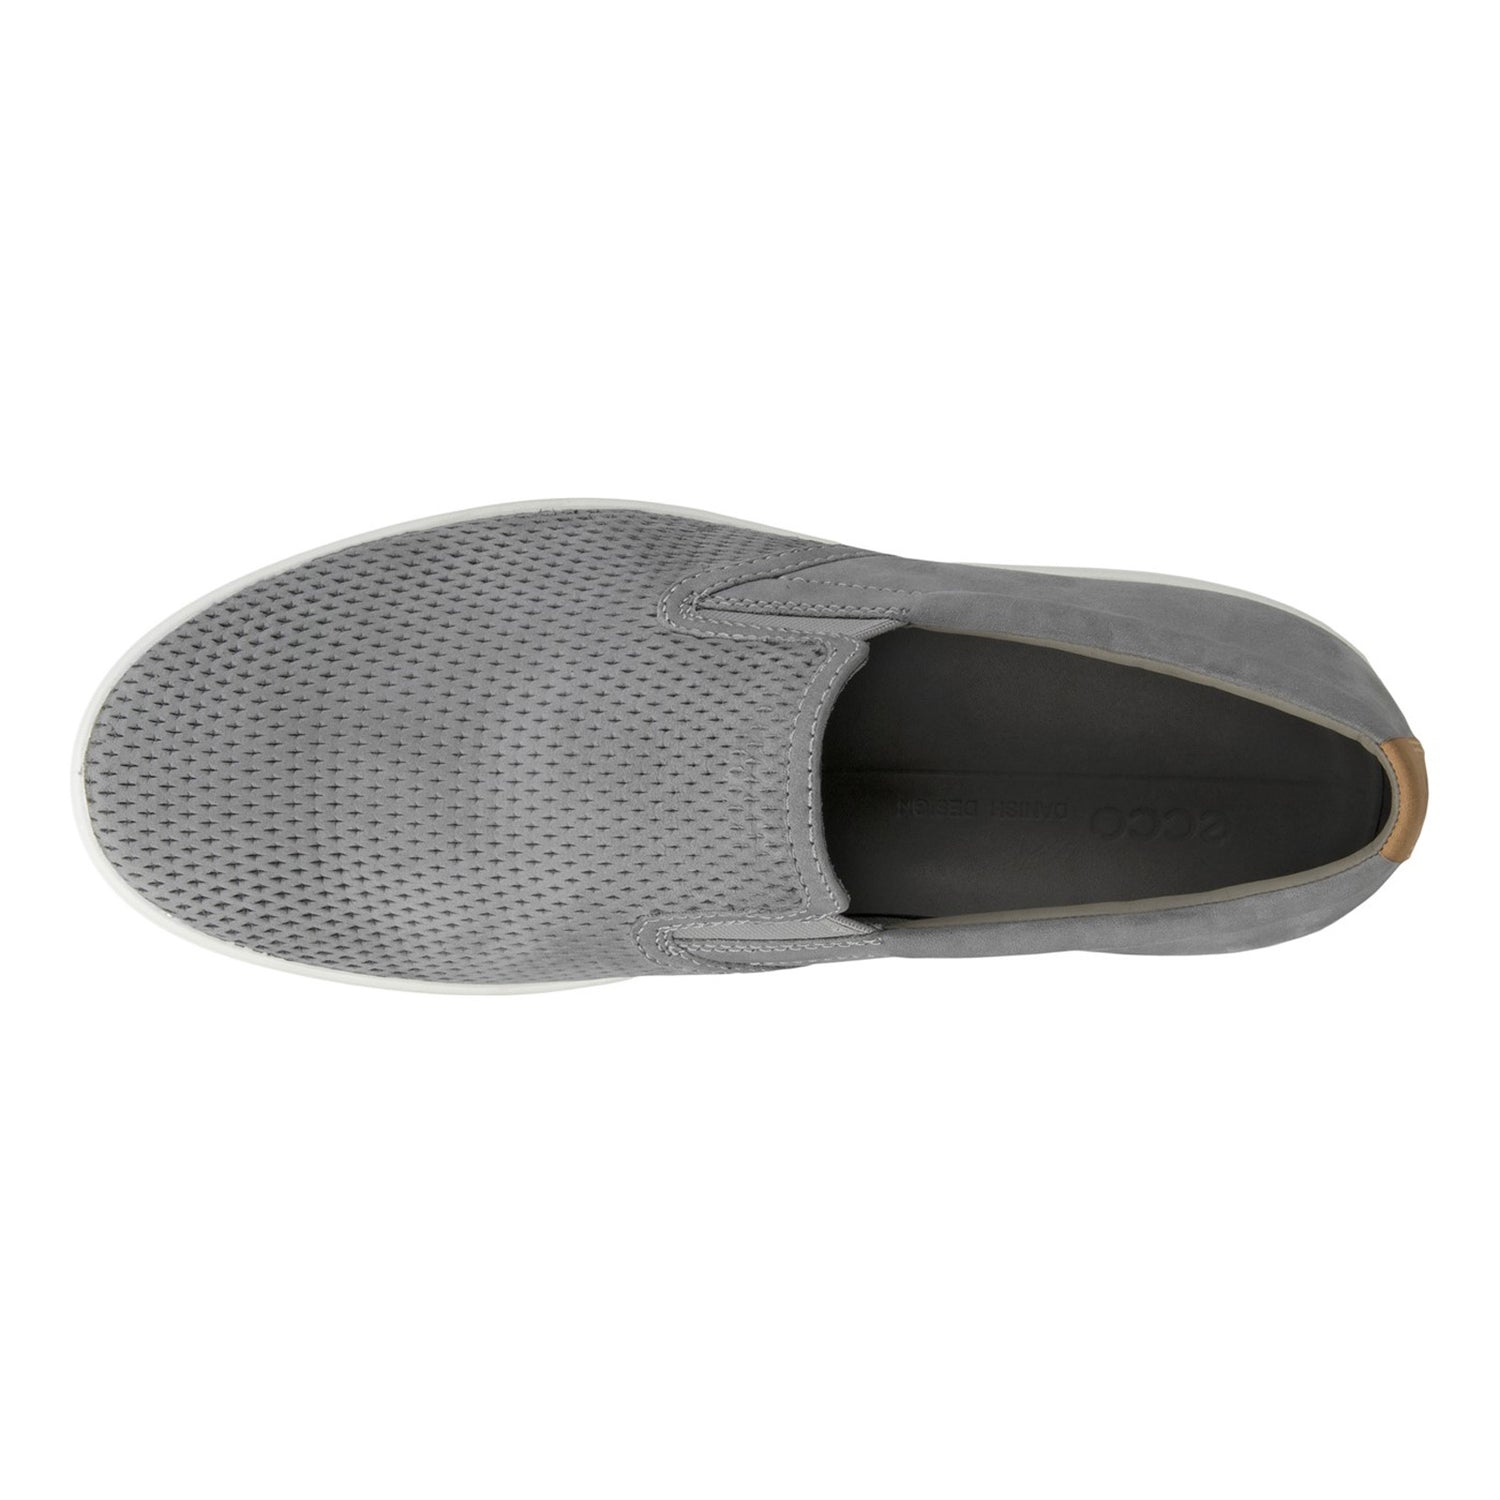 Peltz Shoes  Men's Ecco Soft 7 Slip-On Sneaker wild Dove 470484-60025